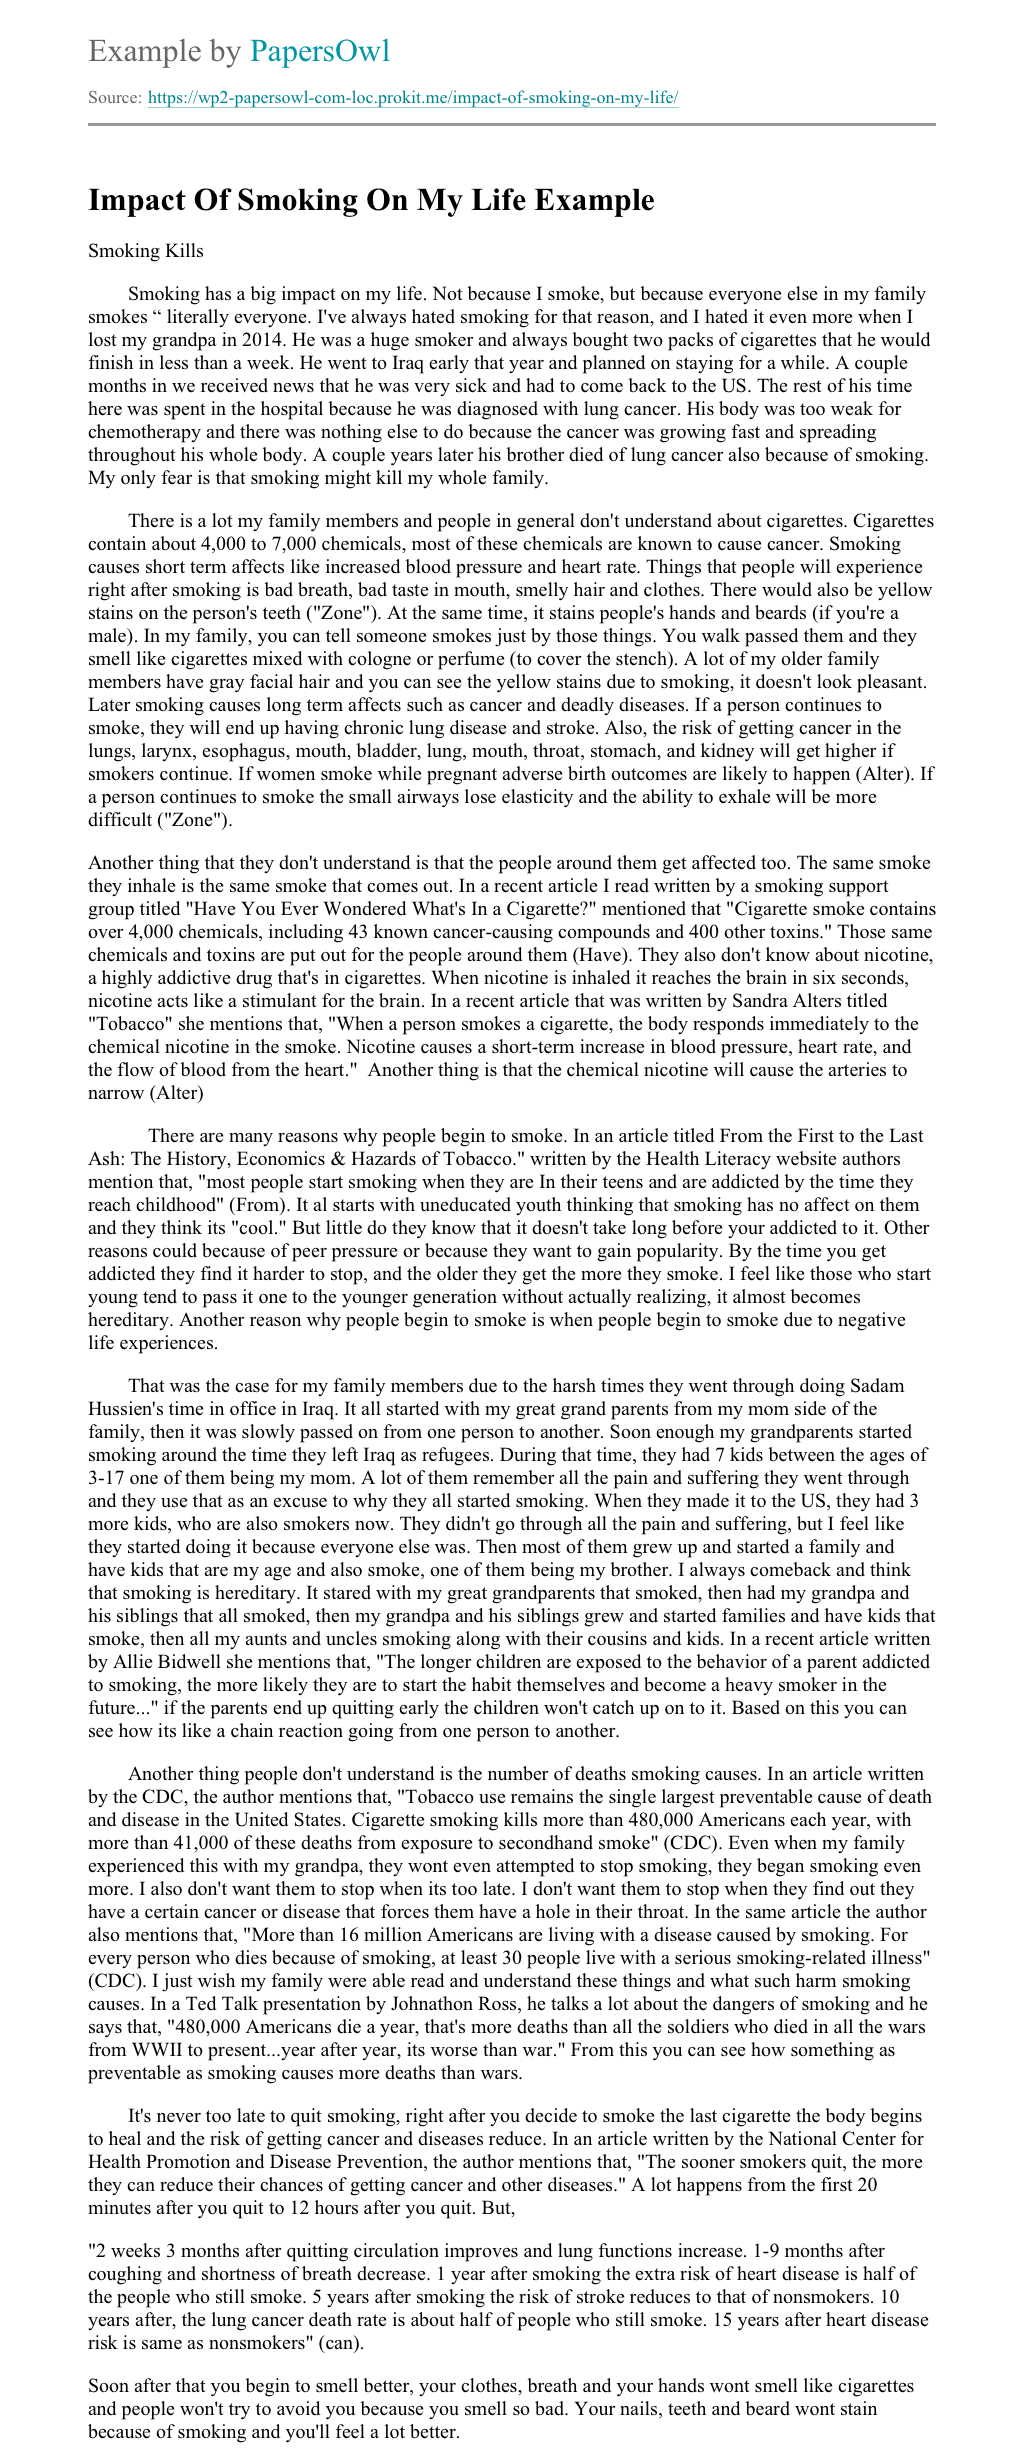 Essay For the https://essaywriter24.com/ Organization Government